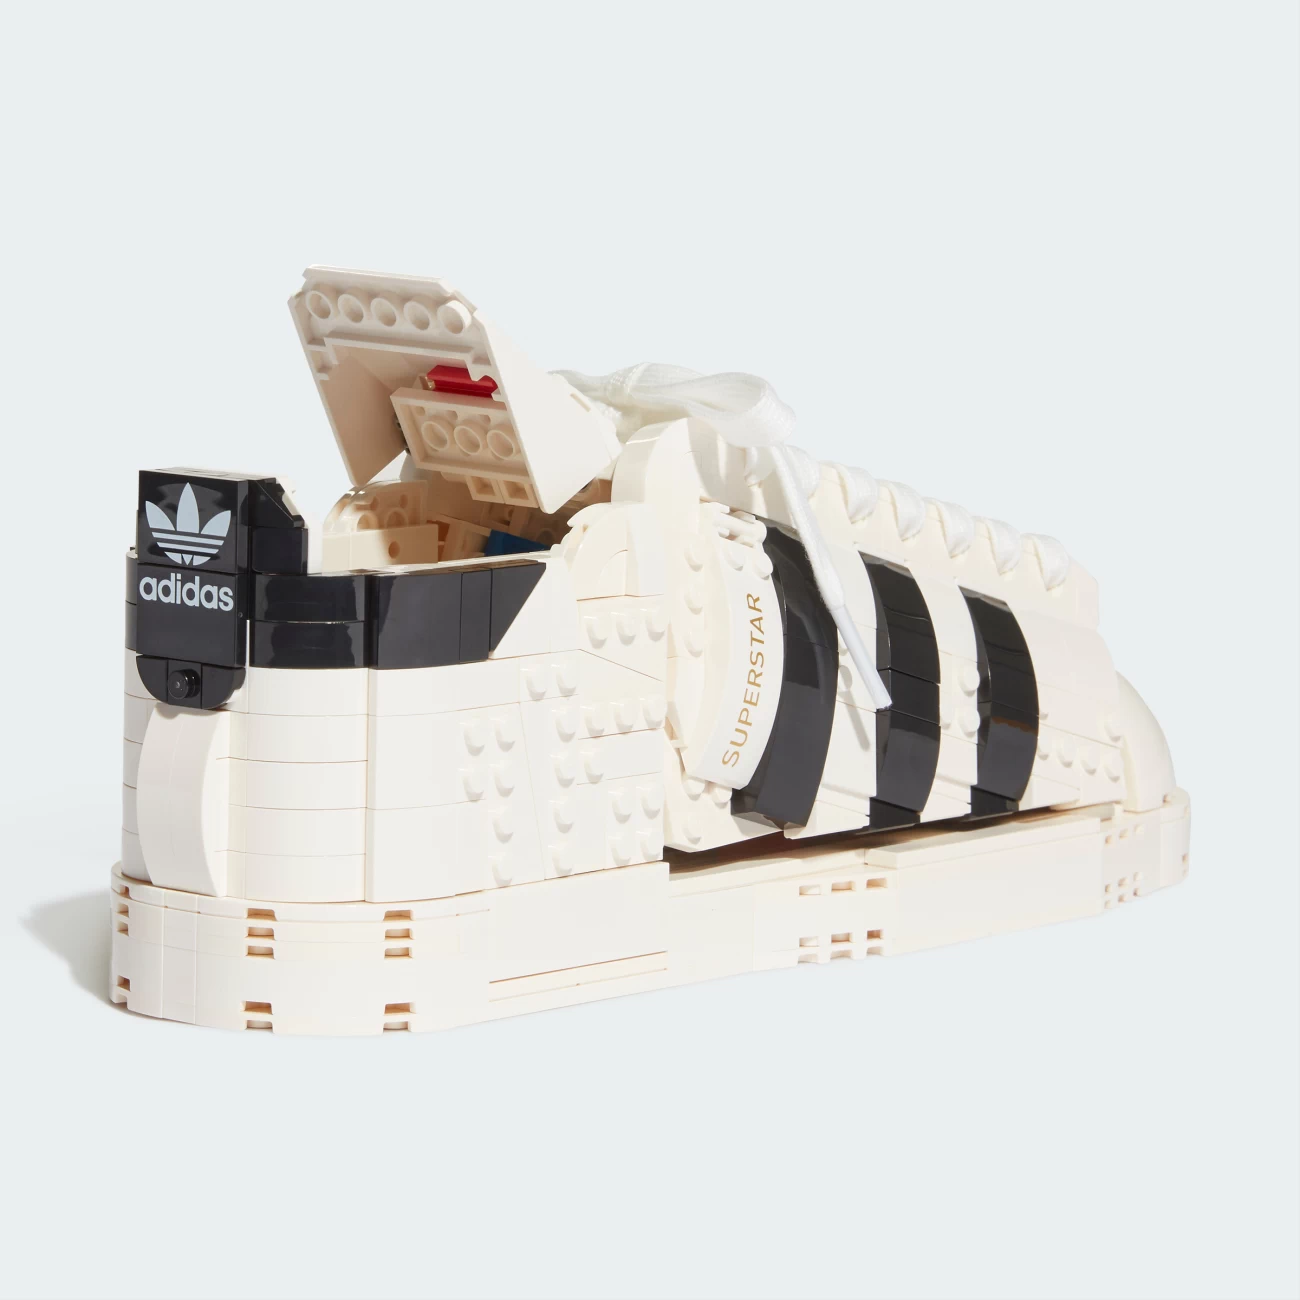 LEGO 10282 - adidas Originals Superstar